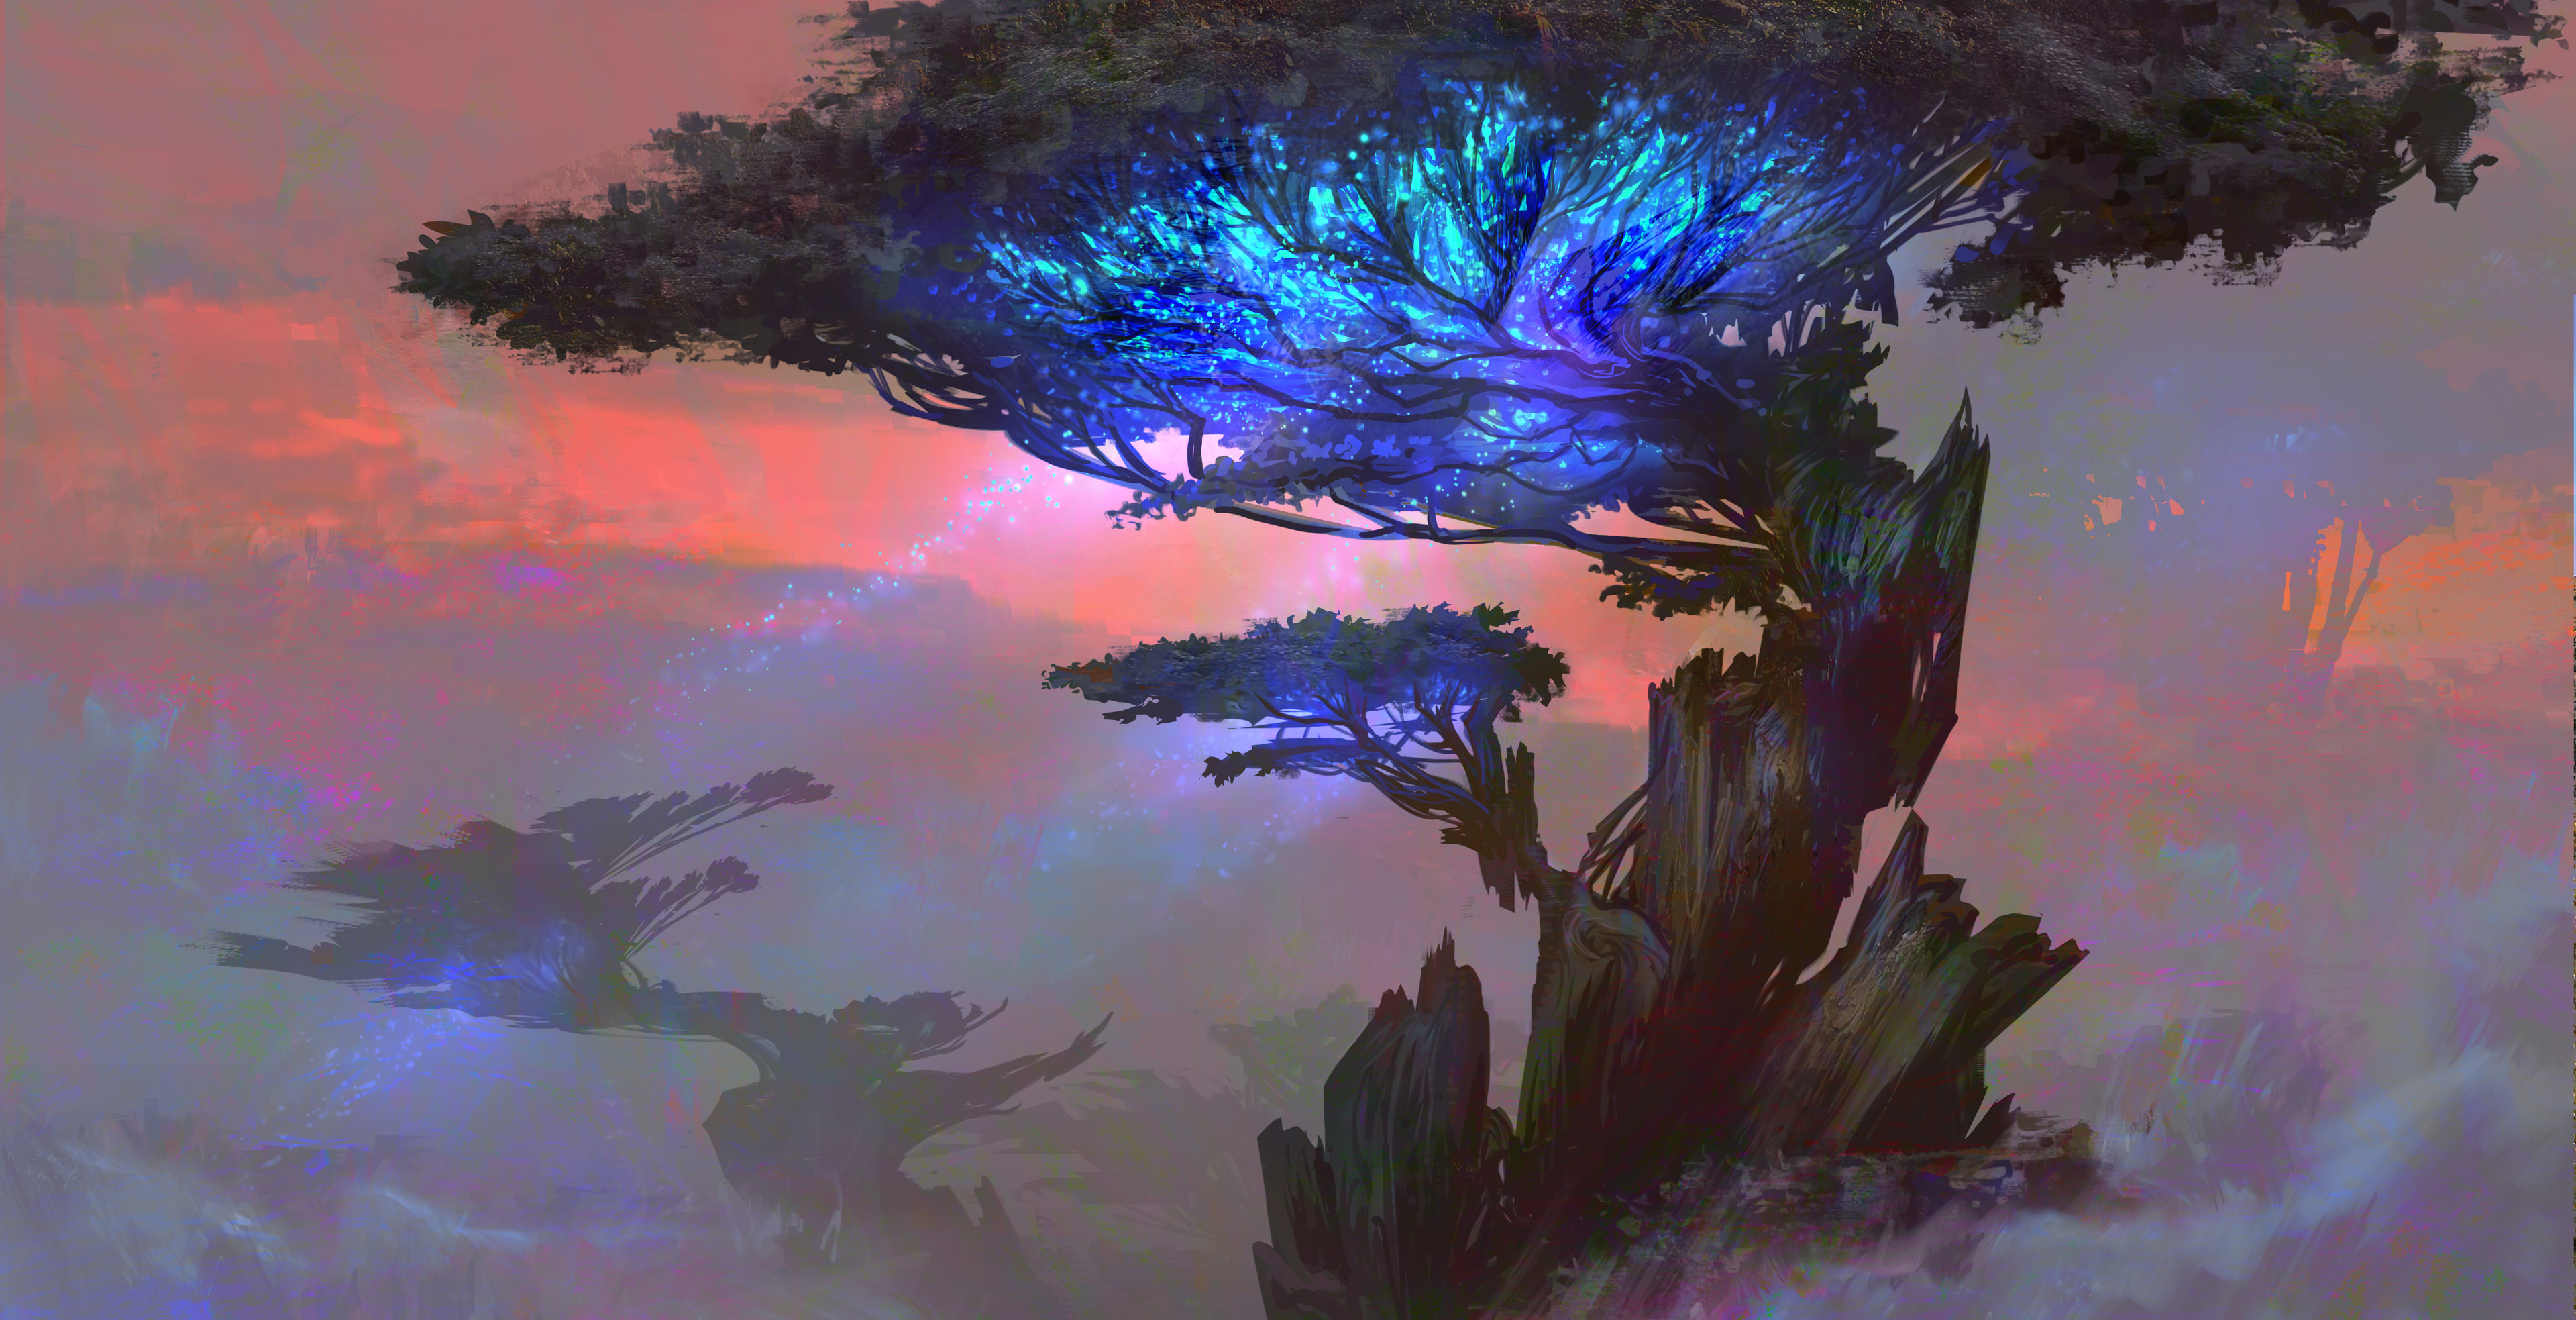 A Fantasy Tree Filled With Blue Energy by David Frasheski